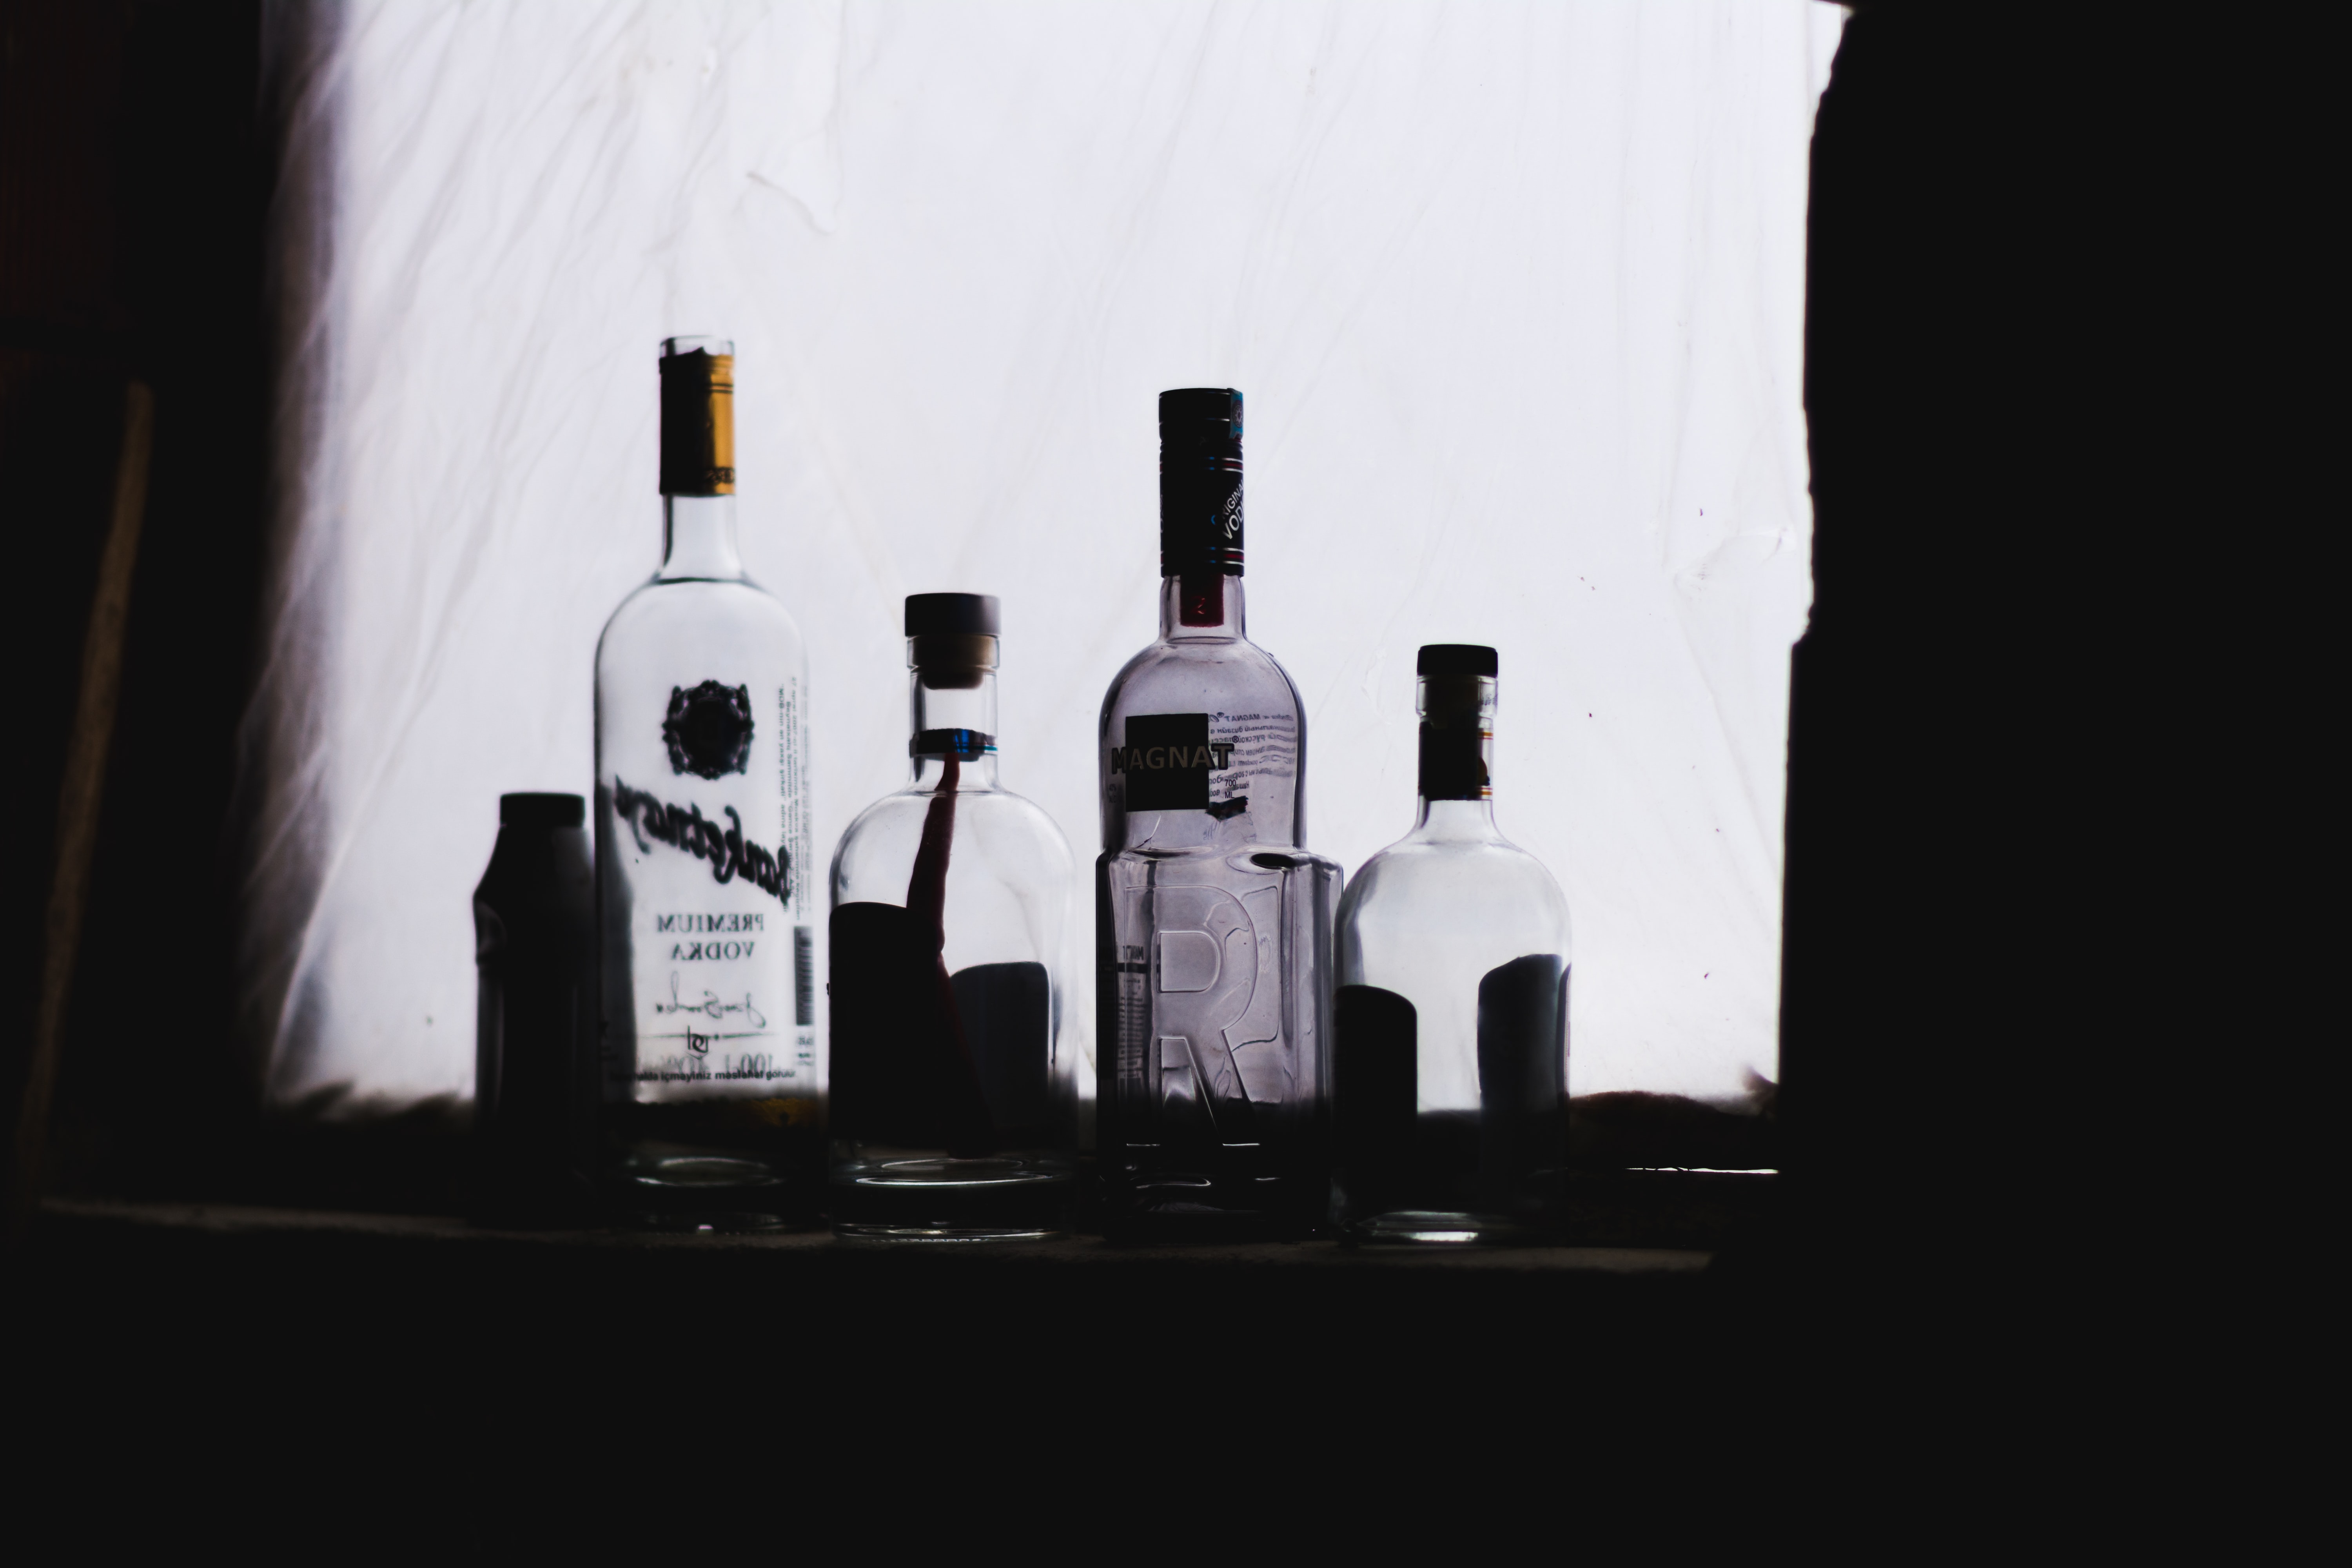 Group of alcohol bottles; image by Orkhan Farmanli, via Unsplash.com.